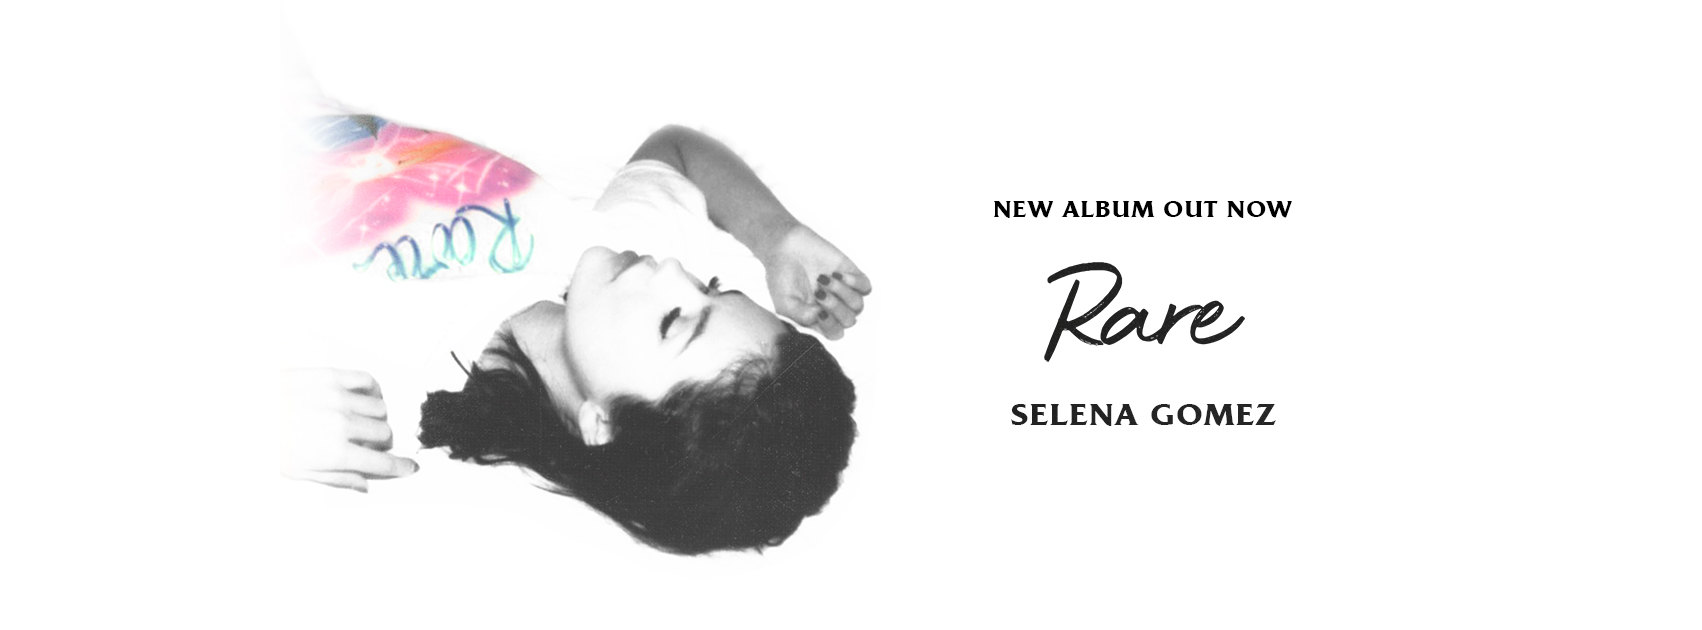 Selena Gomez's "Rare" released on Jan 10